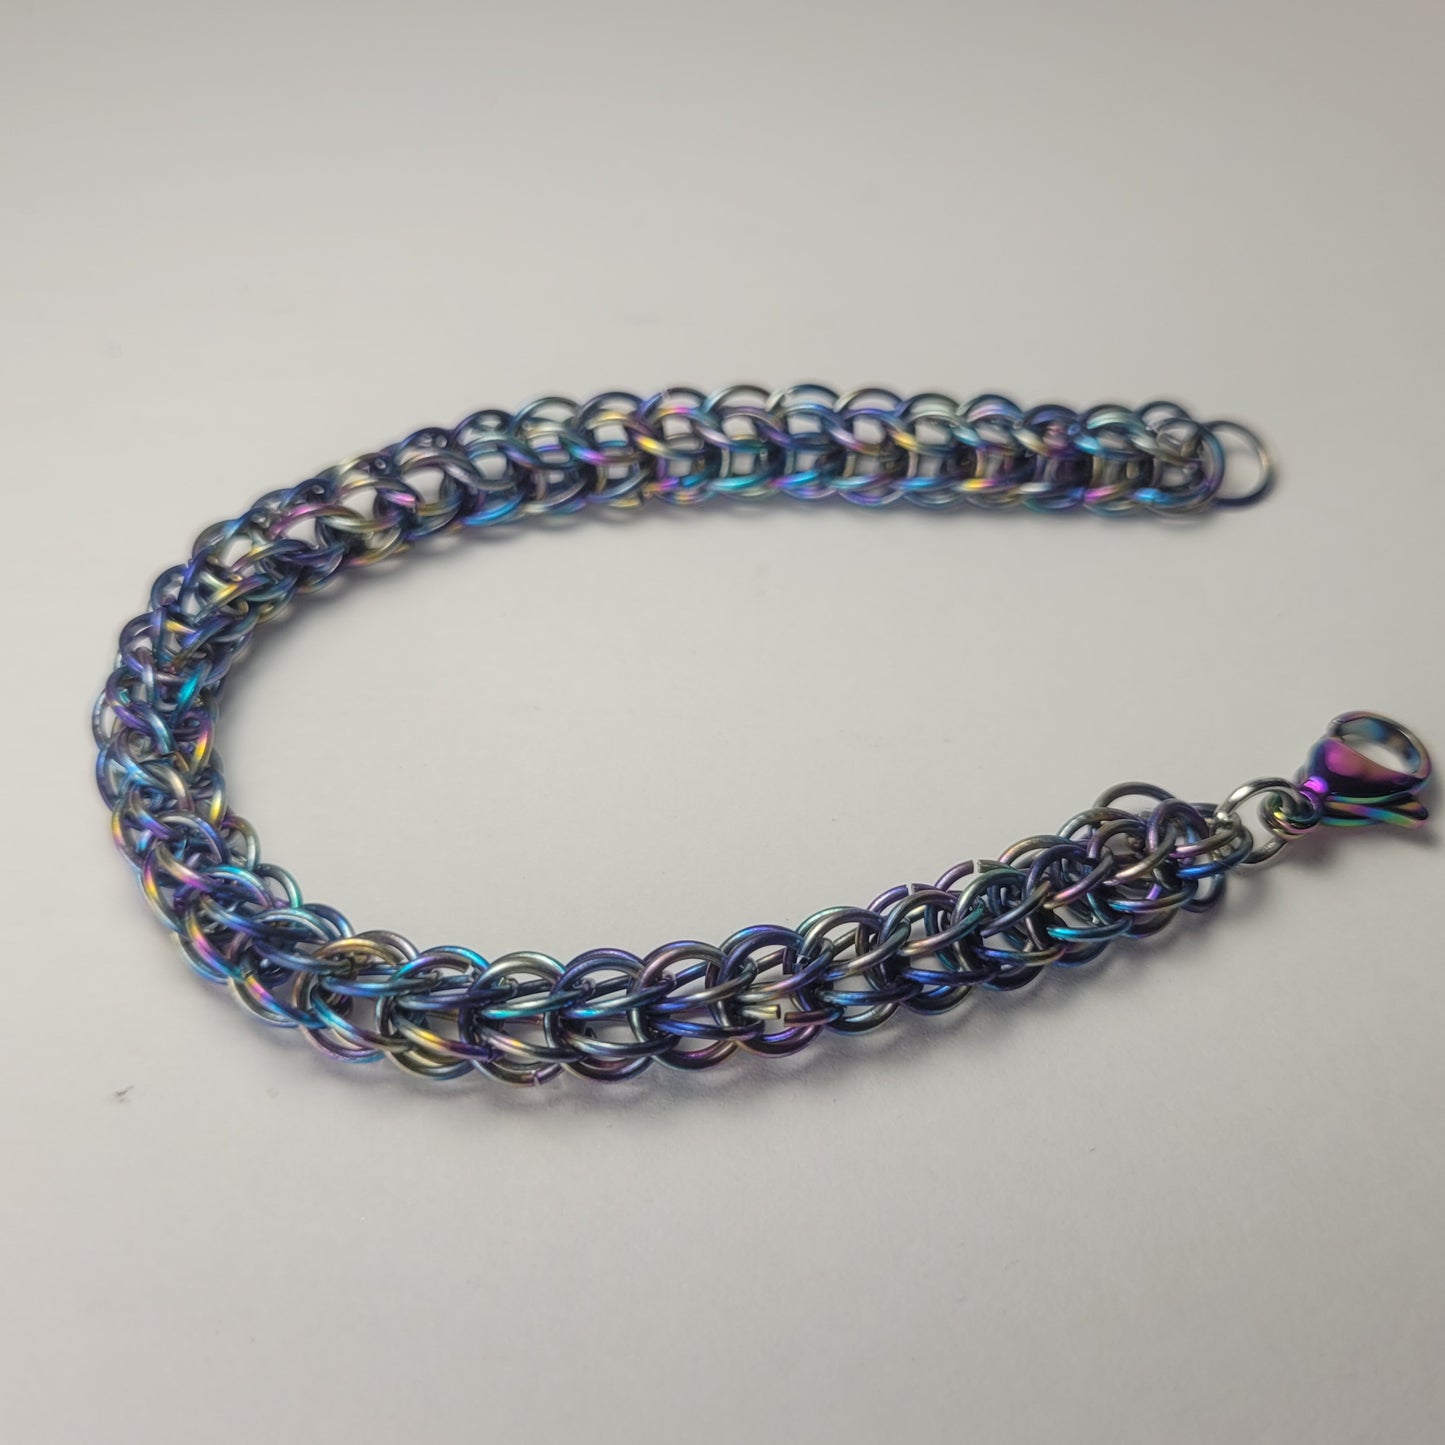 Rainbow chainmail bracelet